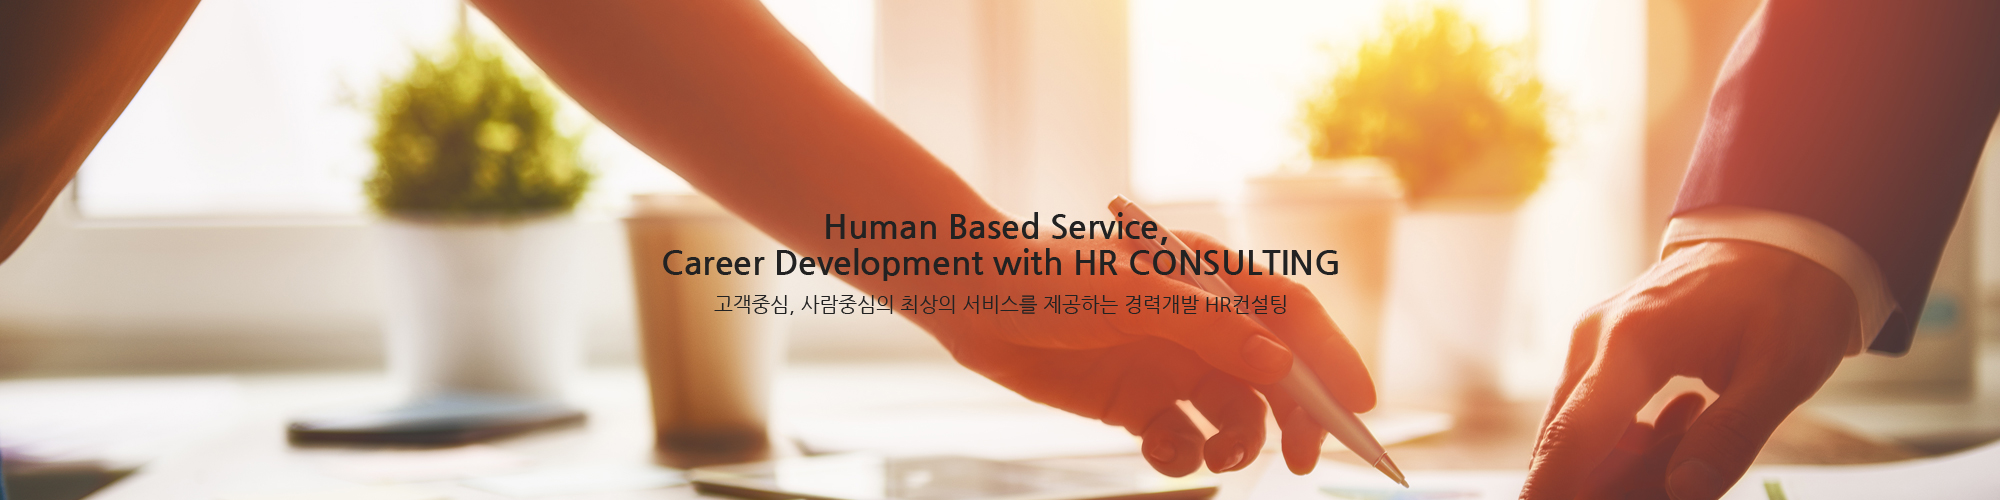 Human Based Service, Career Development with HR CONSULTING / 고객중심, 사람중심의 최상의 서비스를 제공하는 경력개발 HR컨설팅